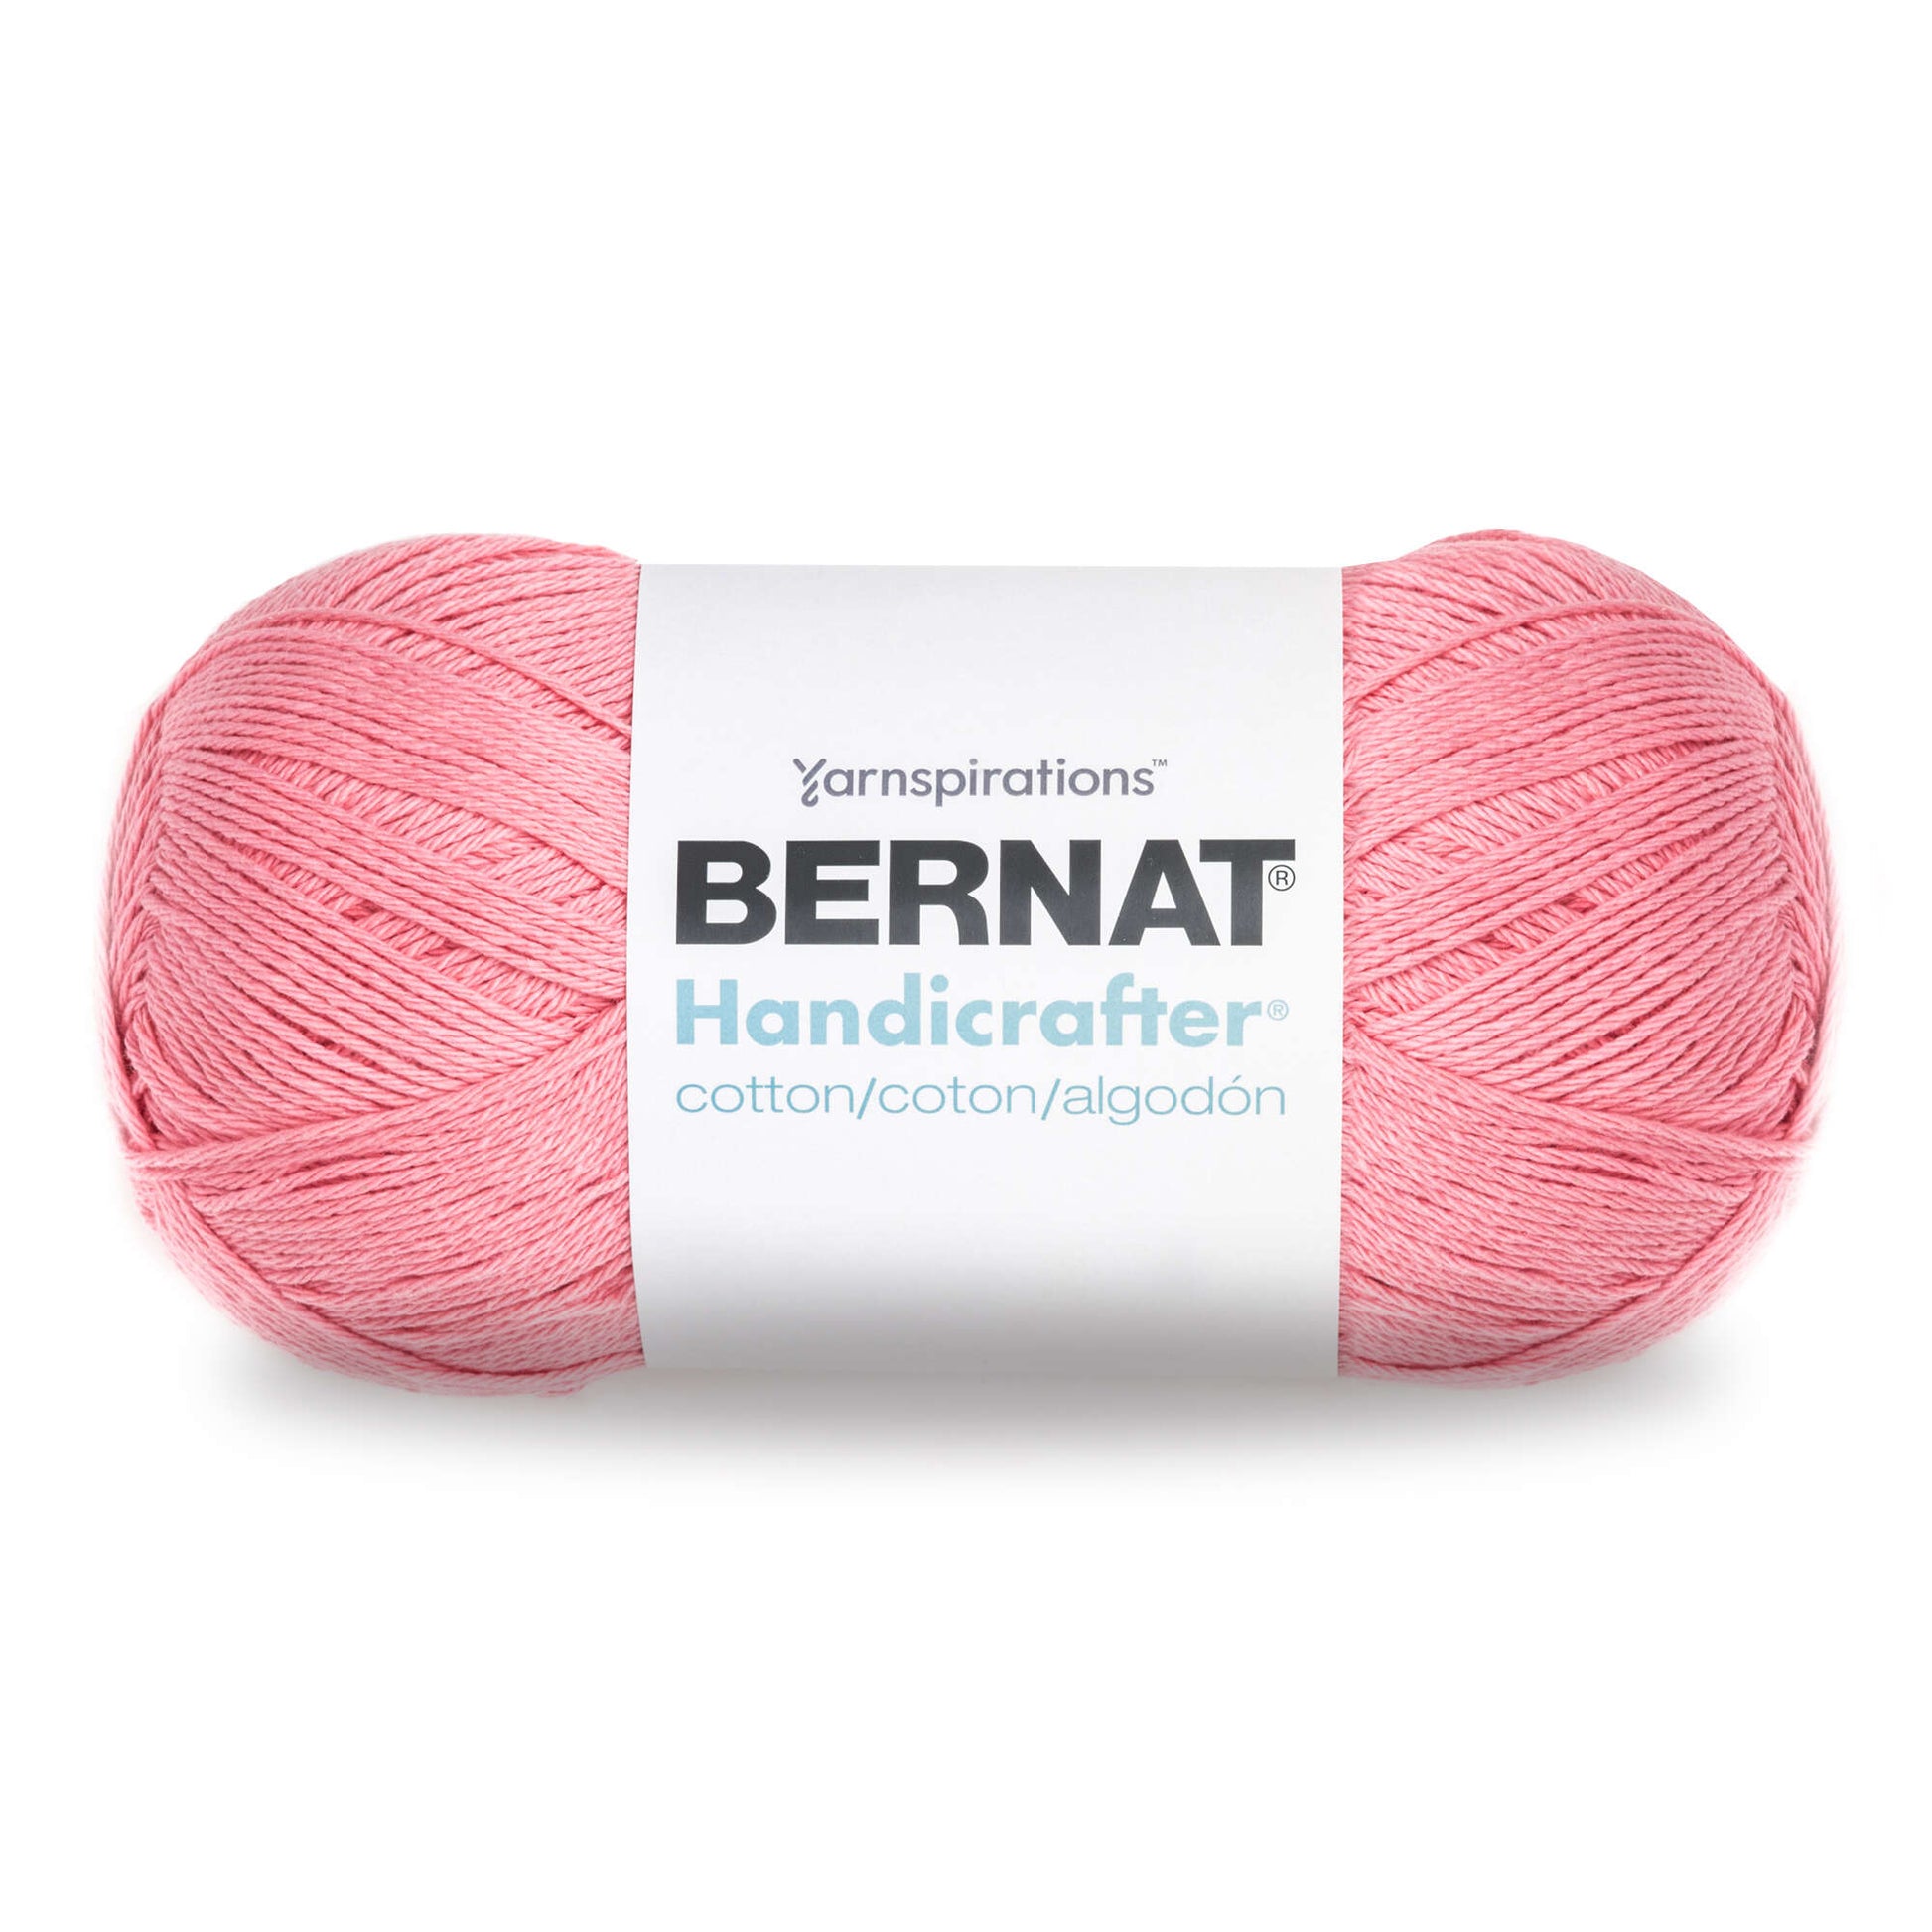 Bernat Handicrafter Cotton Yarn (400g/14oz) - Discontinued Shades Strawberry Shortcake